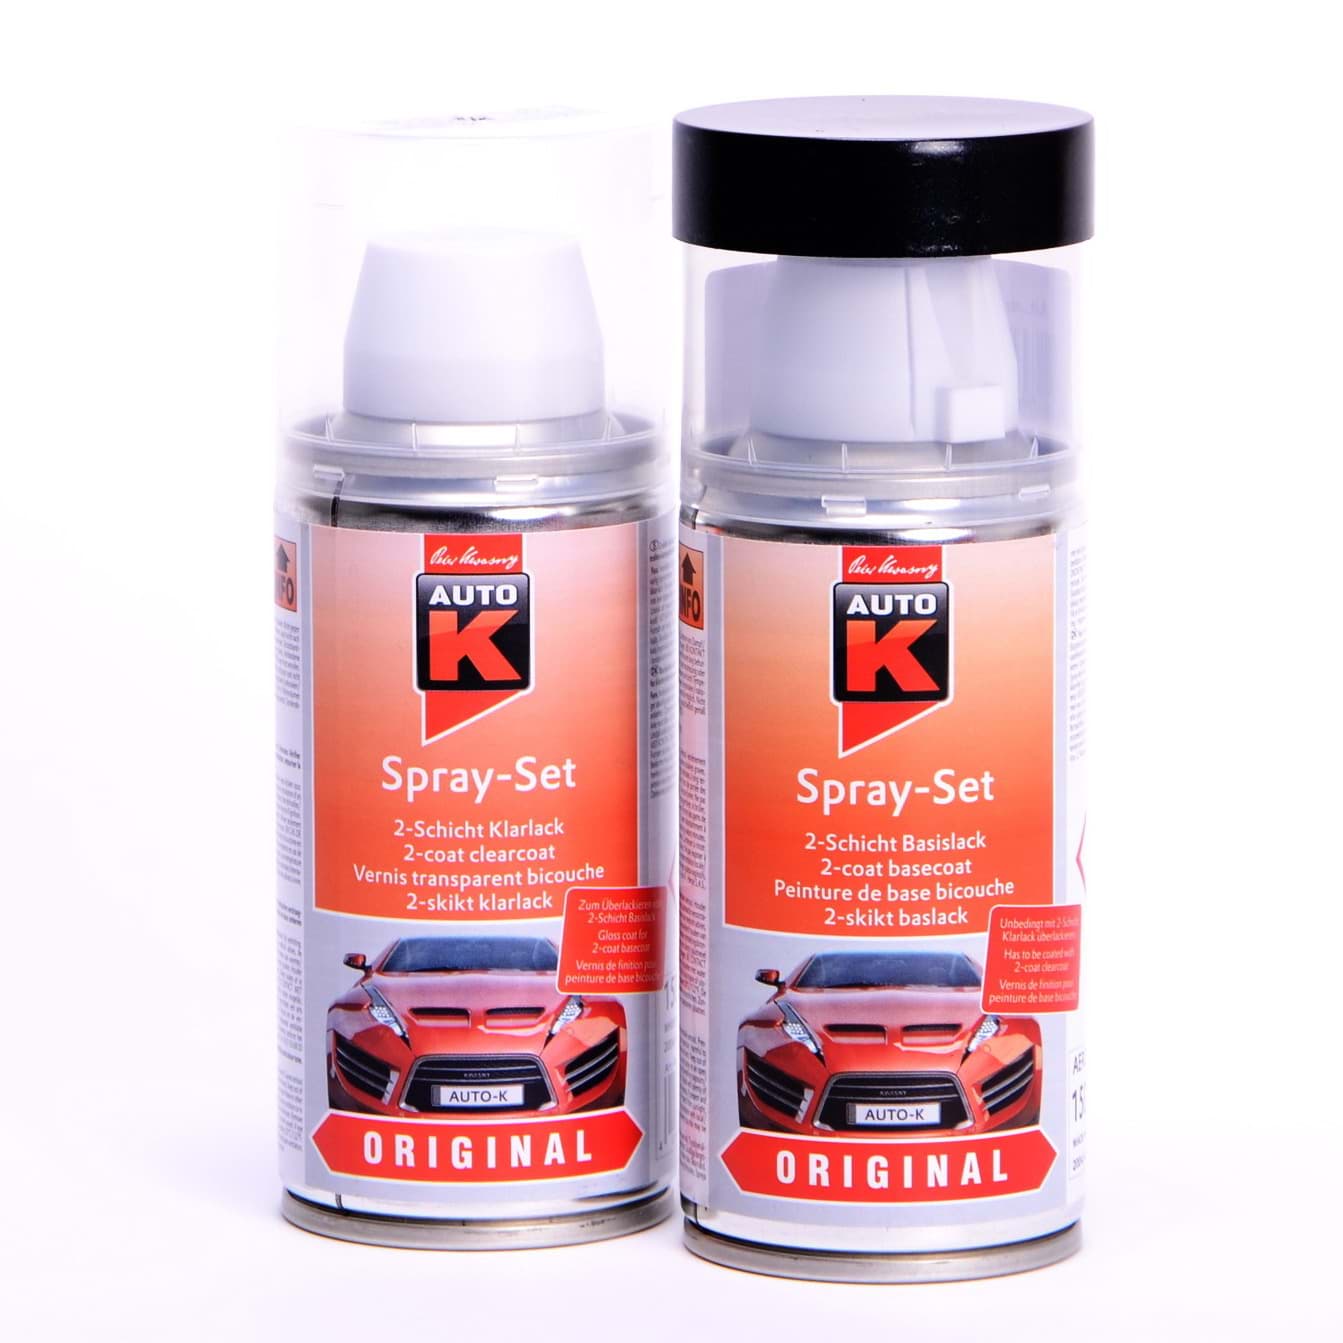 Afbeelding van Auto-K Spray-Set Autolack für Opel 2HU Saphirschwarz met 21465